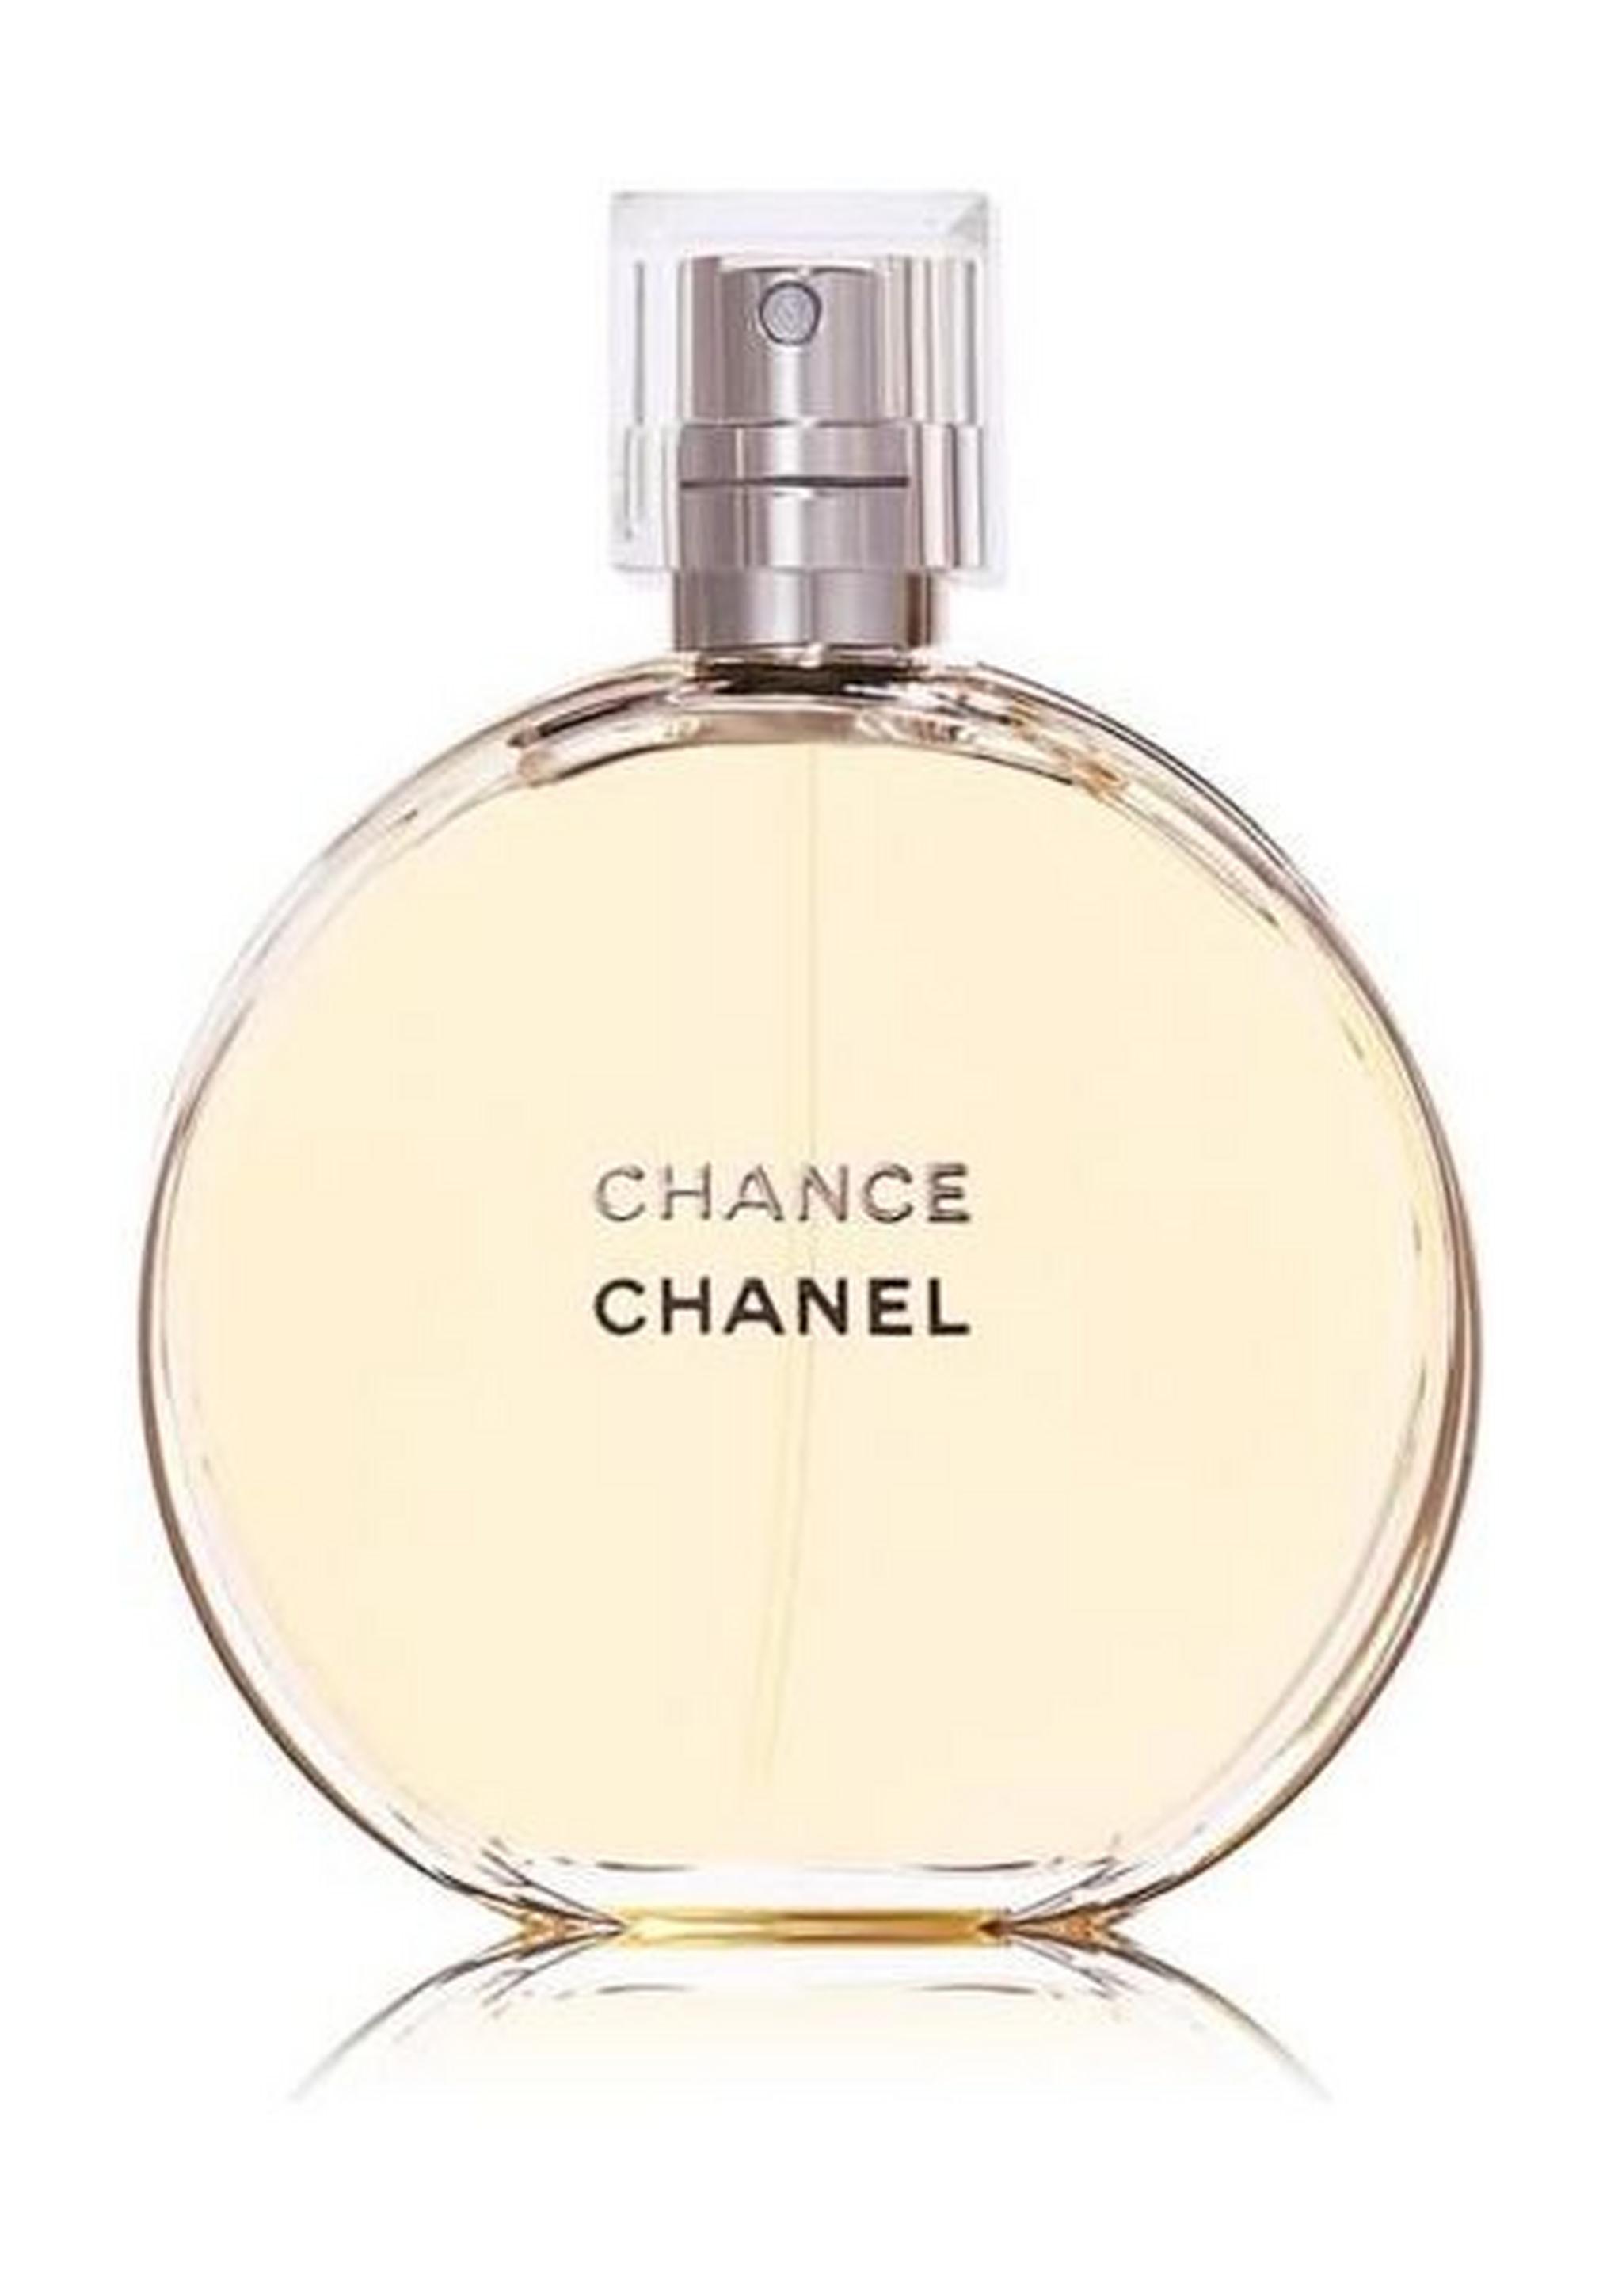 Chanel Chance for Women Eau de Toilette 50ml